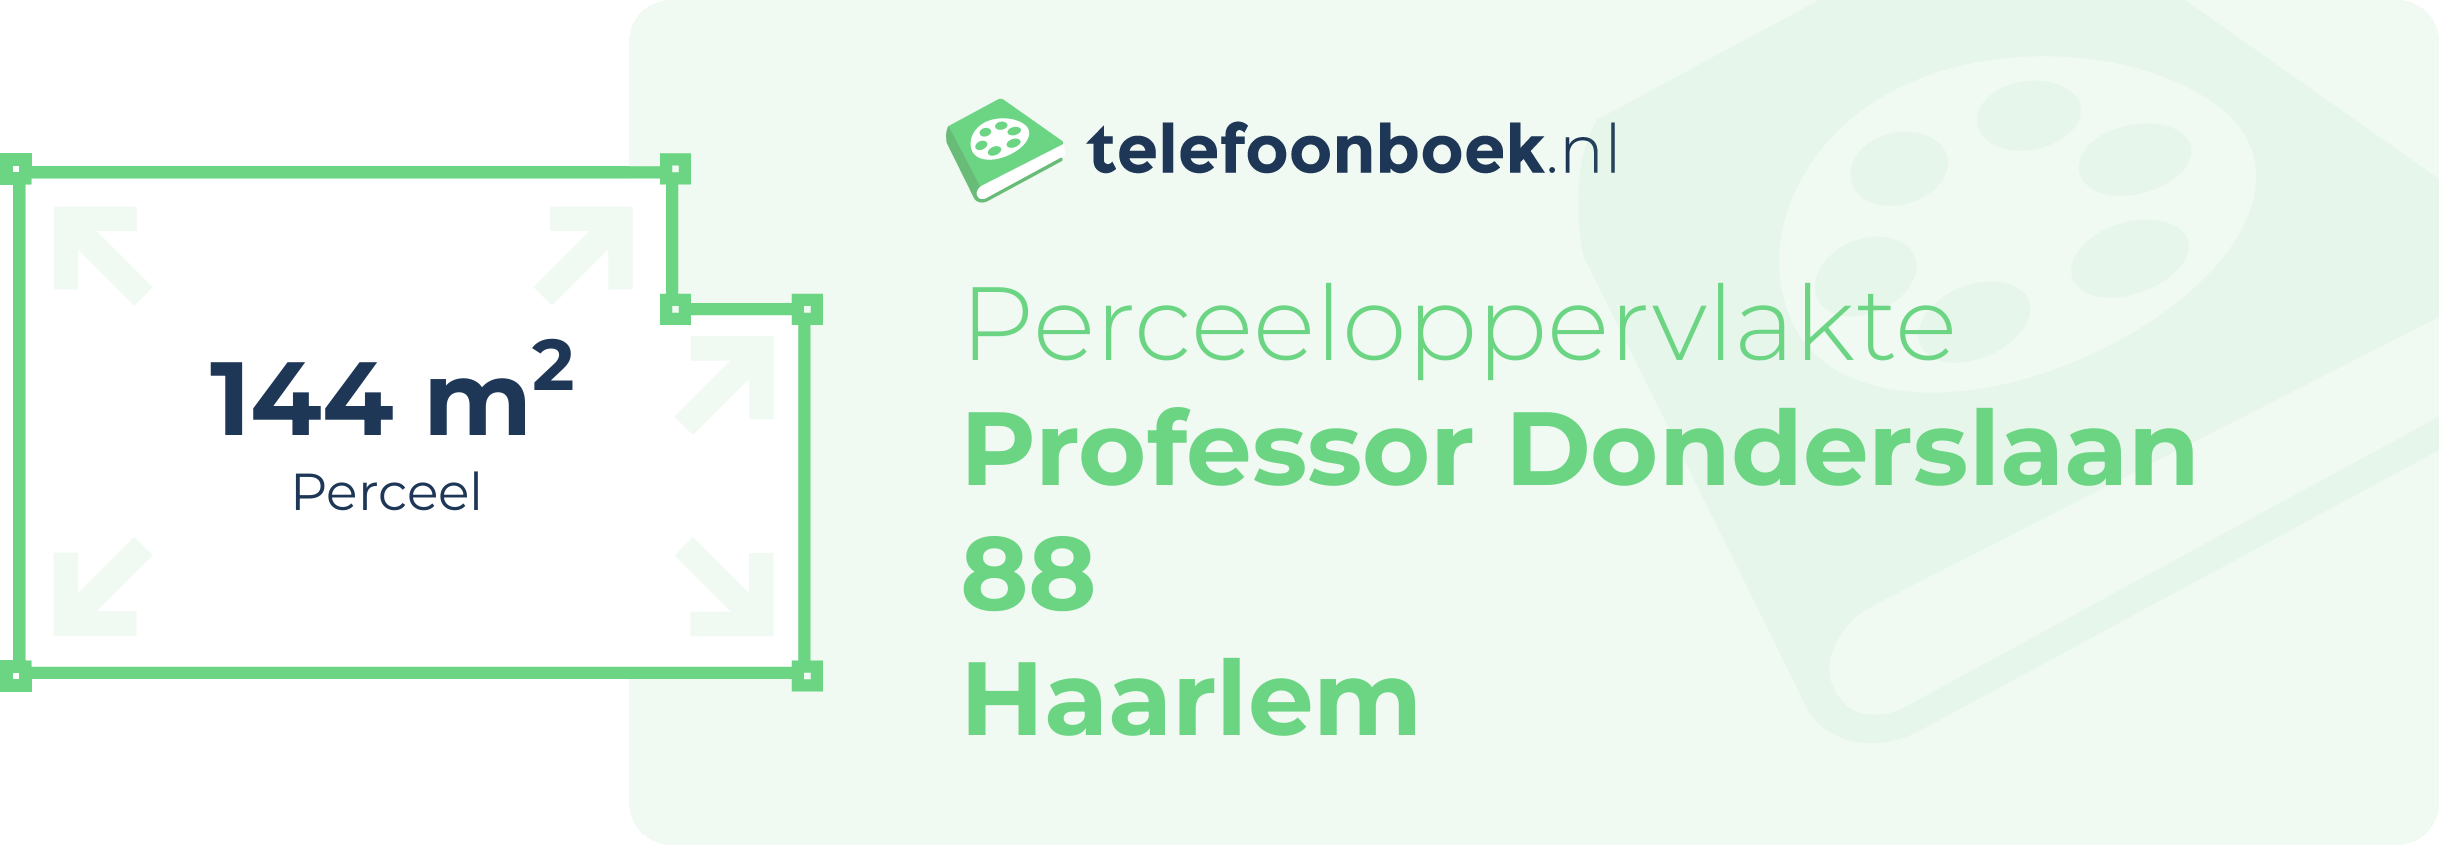 Perceeloppervlakte Professor Donderslaan 88 Haarlem